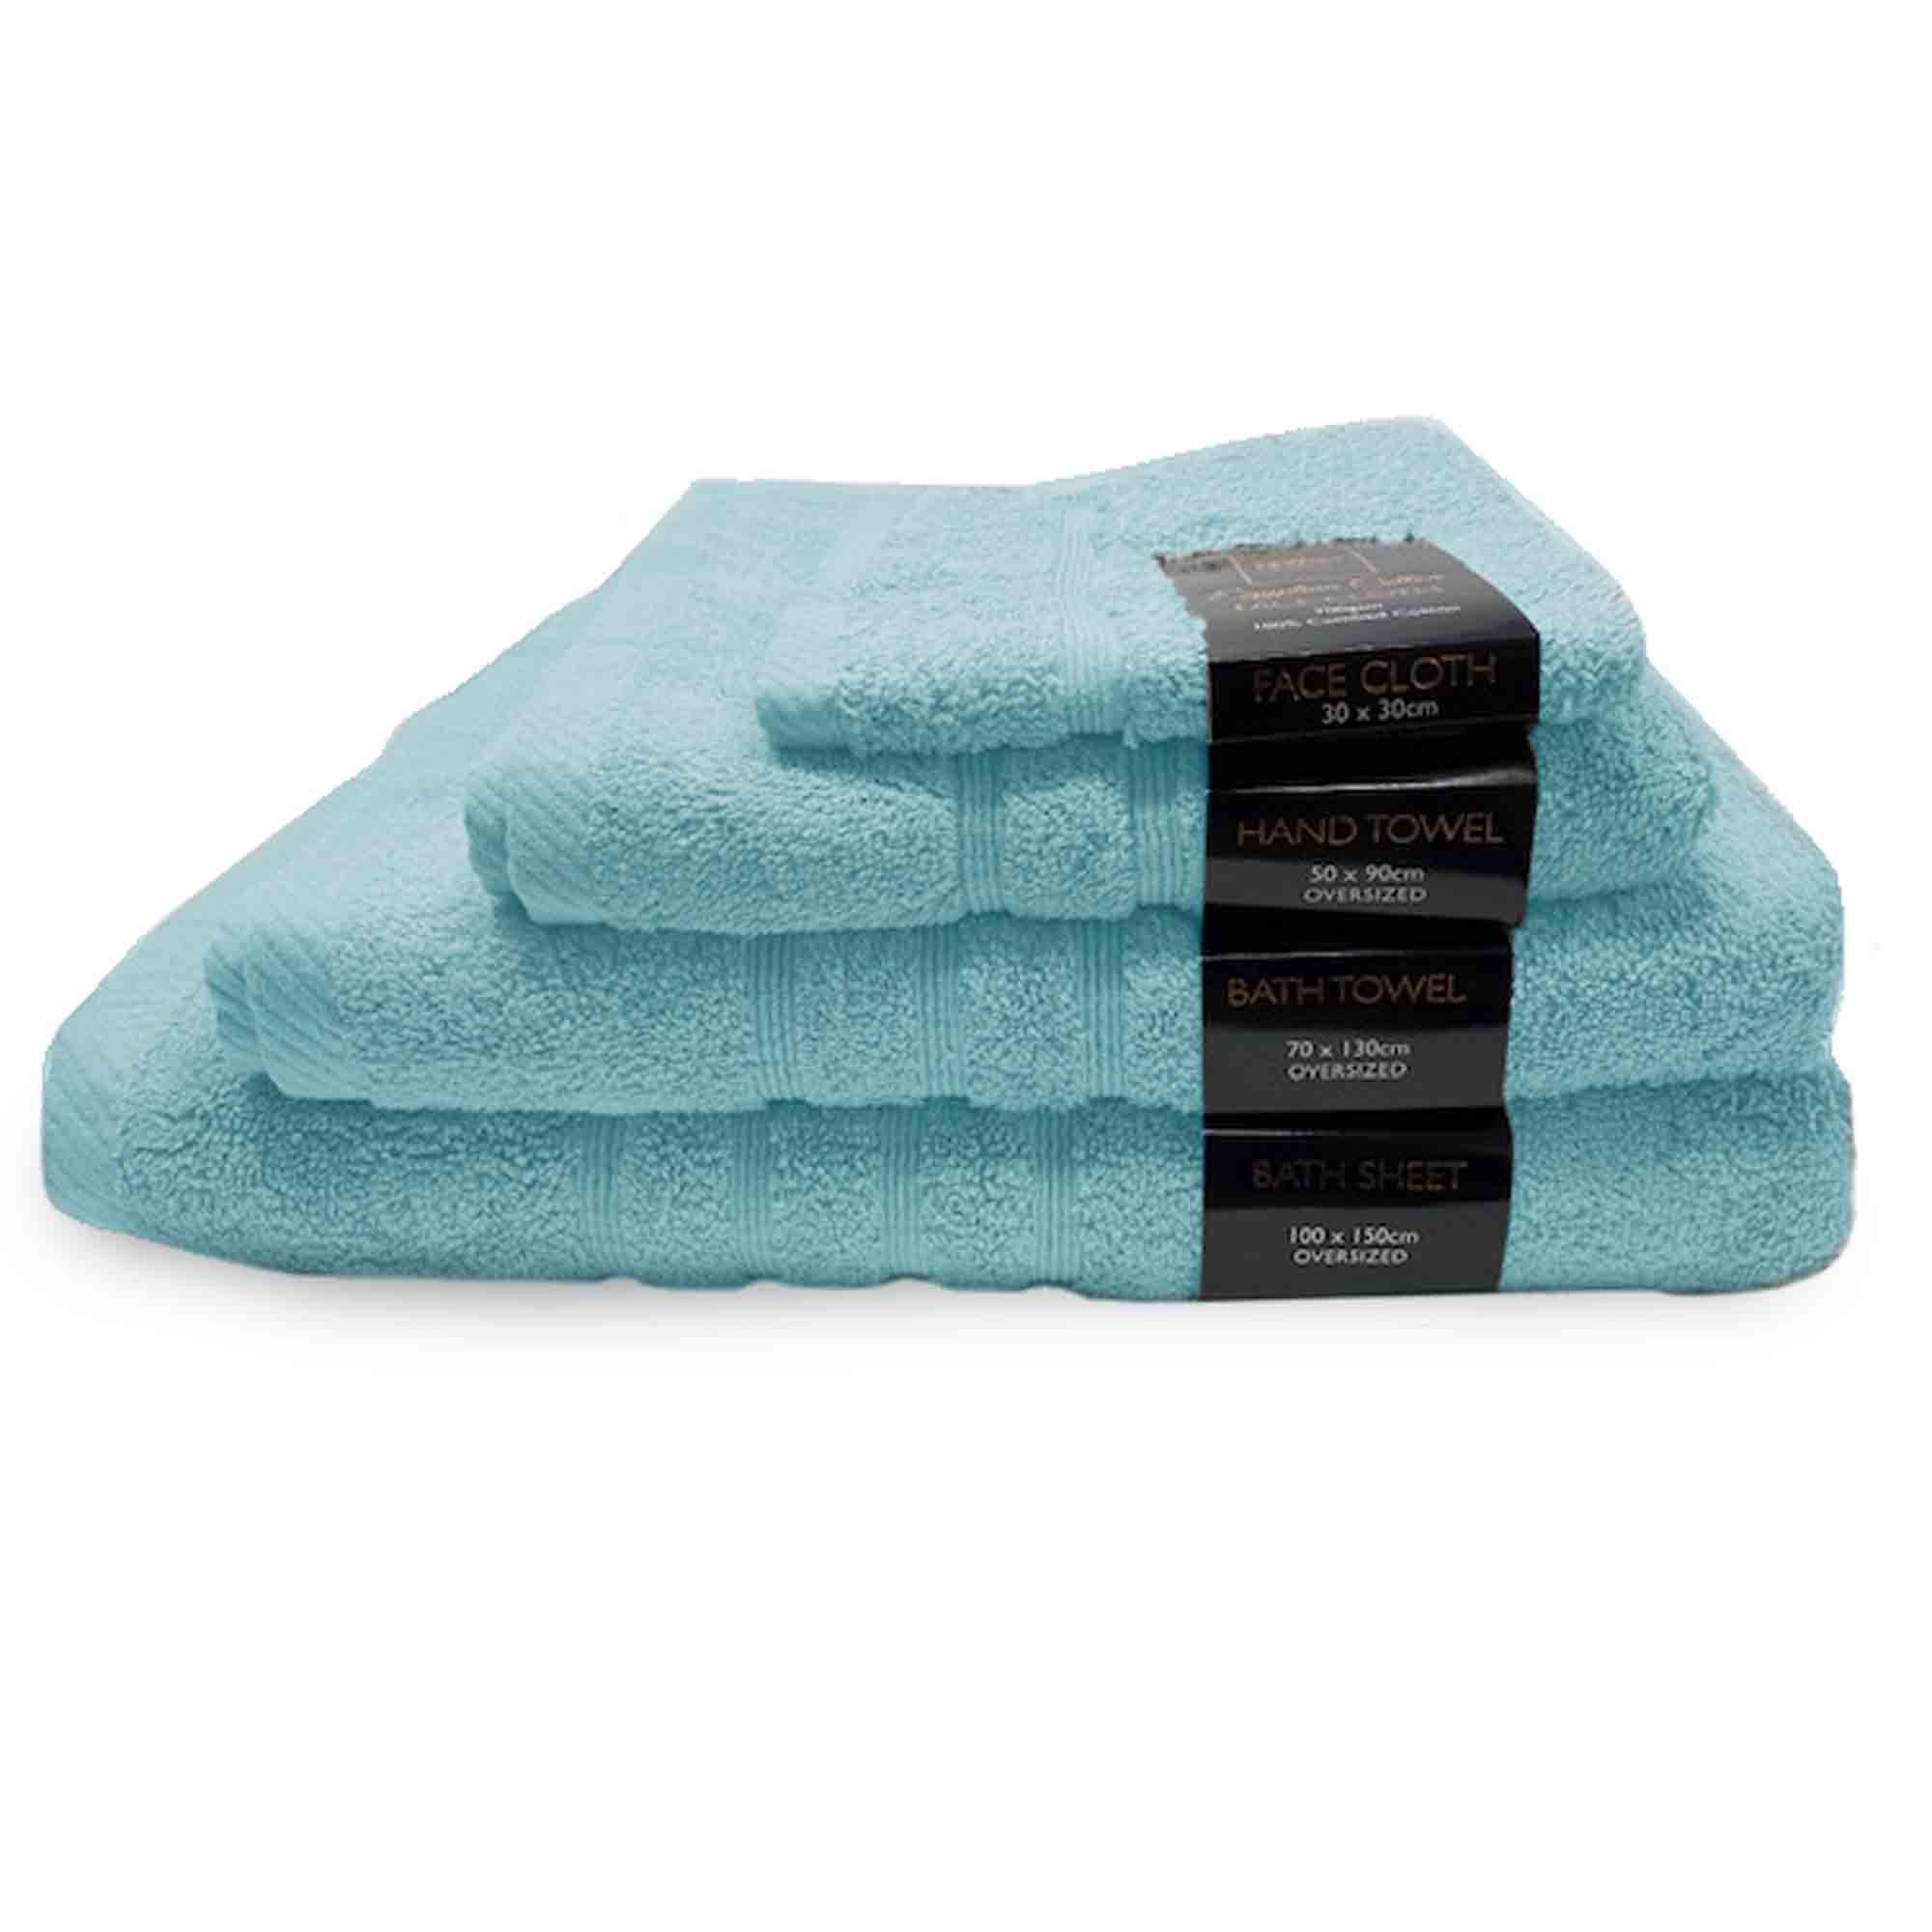 Lewis’s Luxury Egyptian 100% Cotton Towel Range - Aqua - Face Cloth  | TJ Hughes